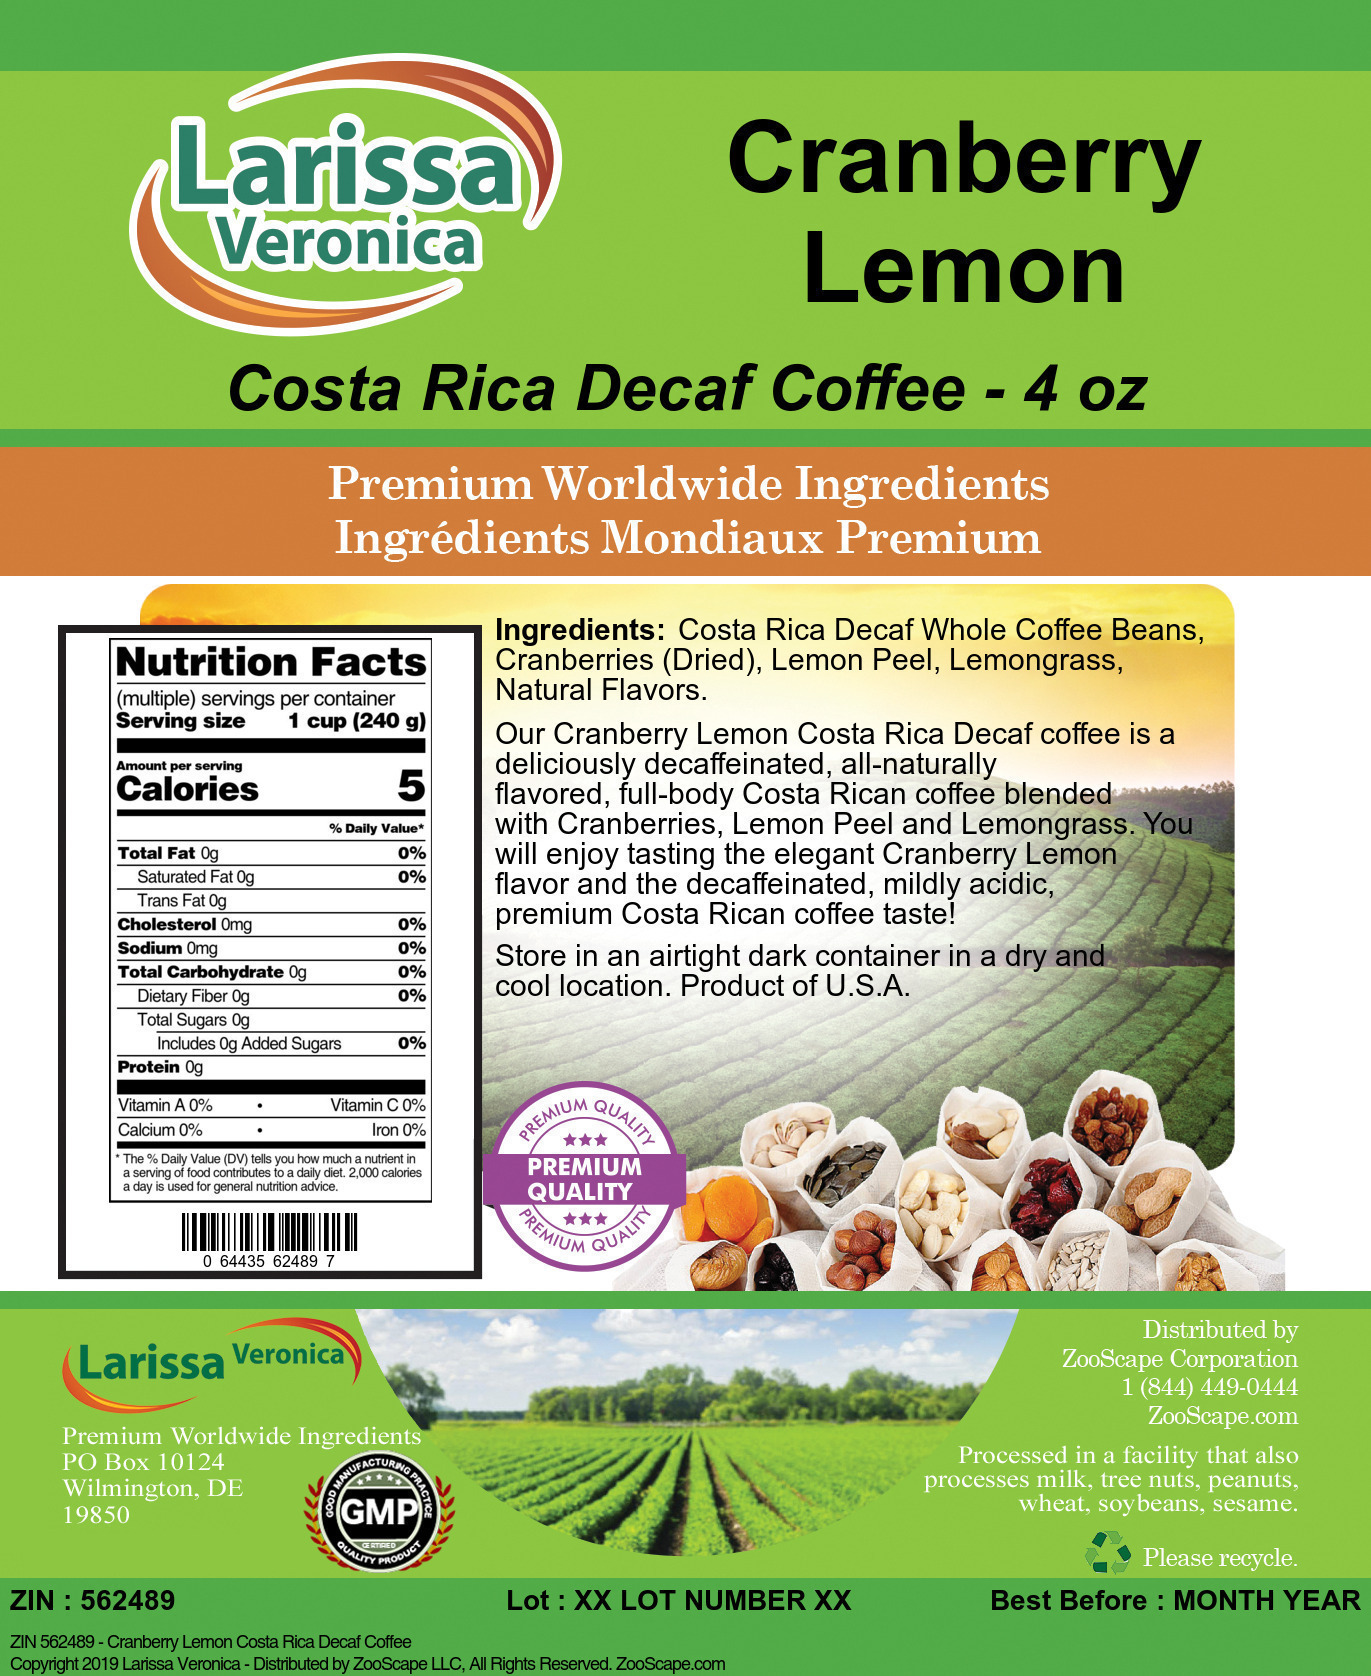 Cranberry Lemon Costa Rica Decaf Coffee - Label